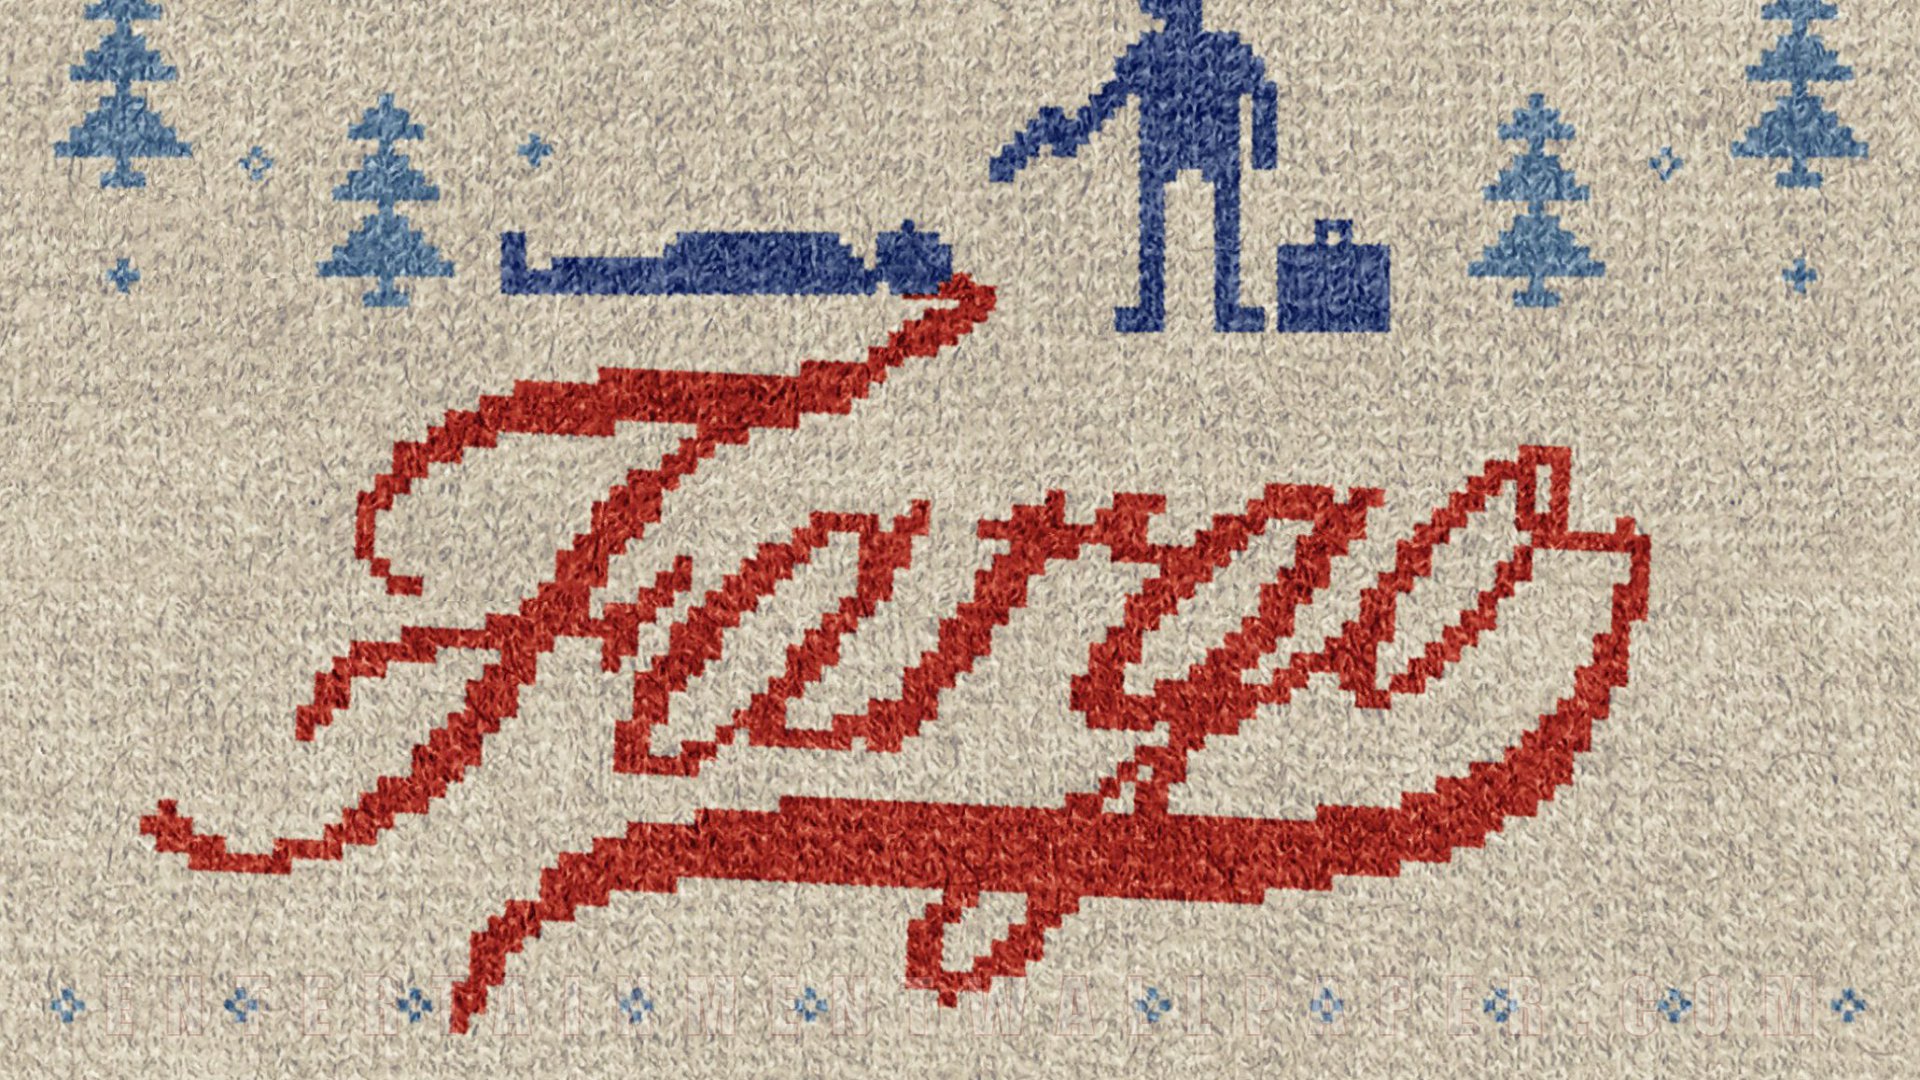 Movie Fargo HD Wallpaper | Background Image